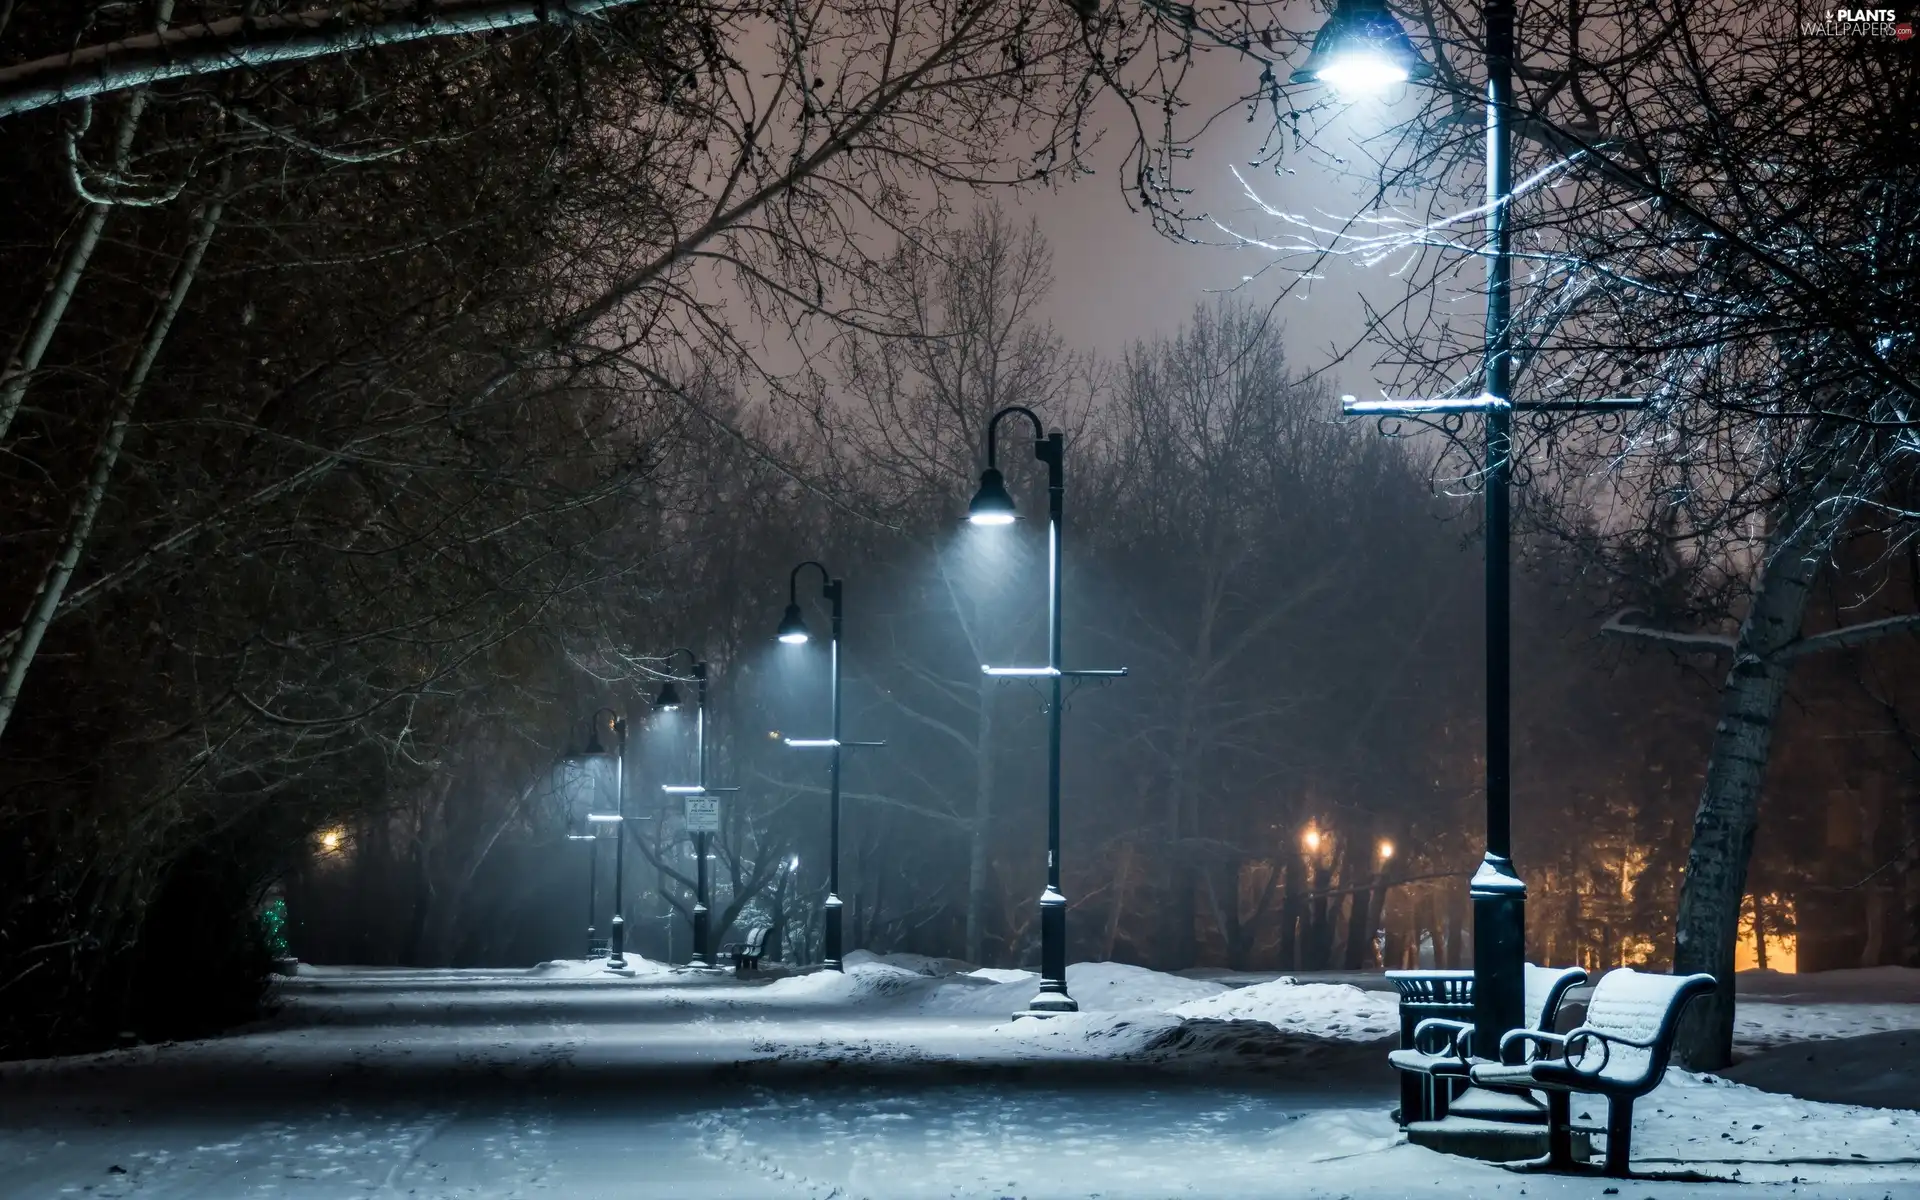 Park, bench, winter, lanterns